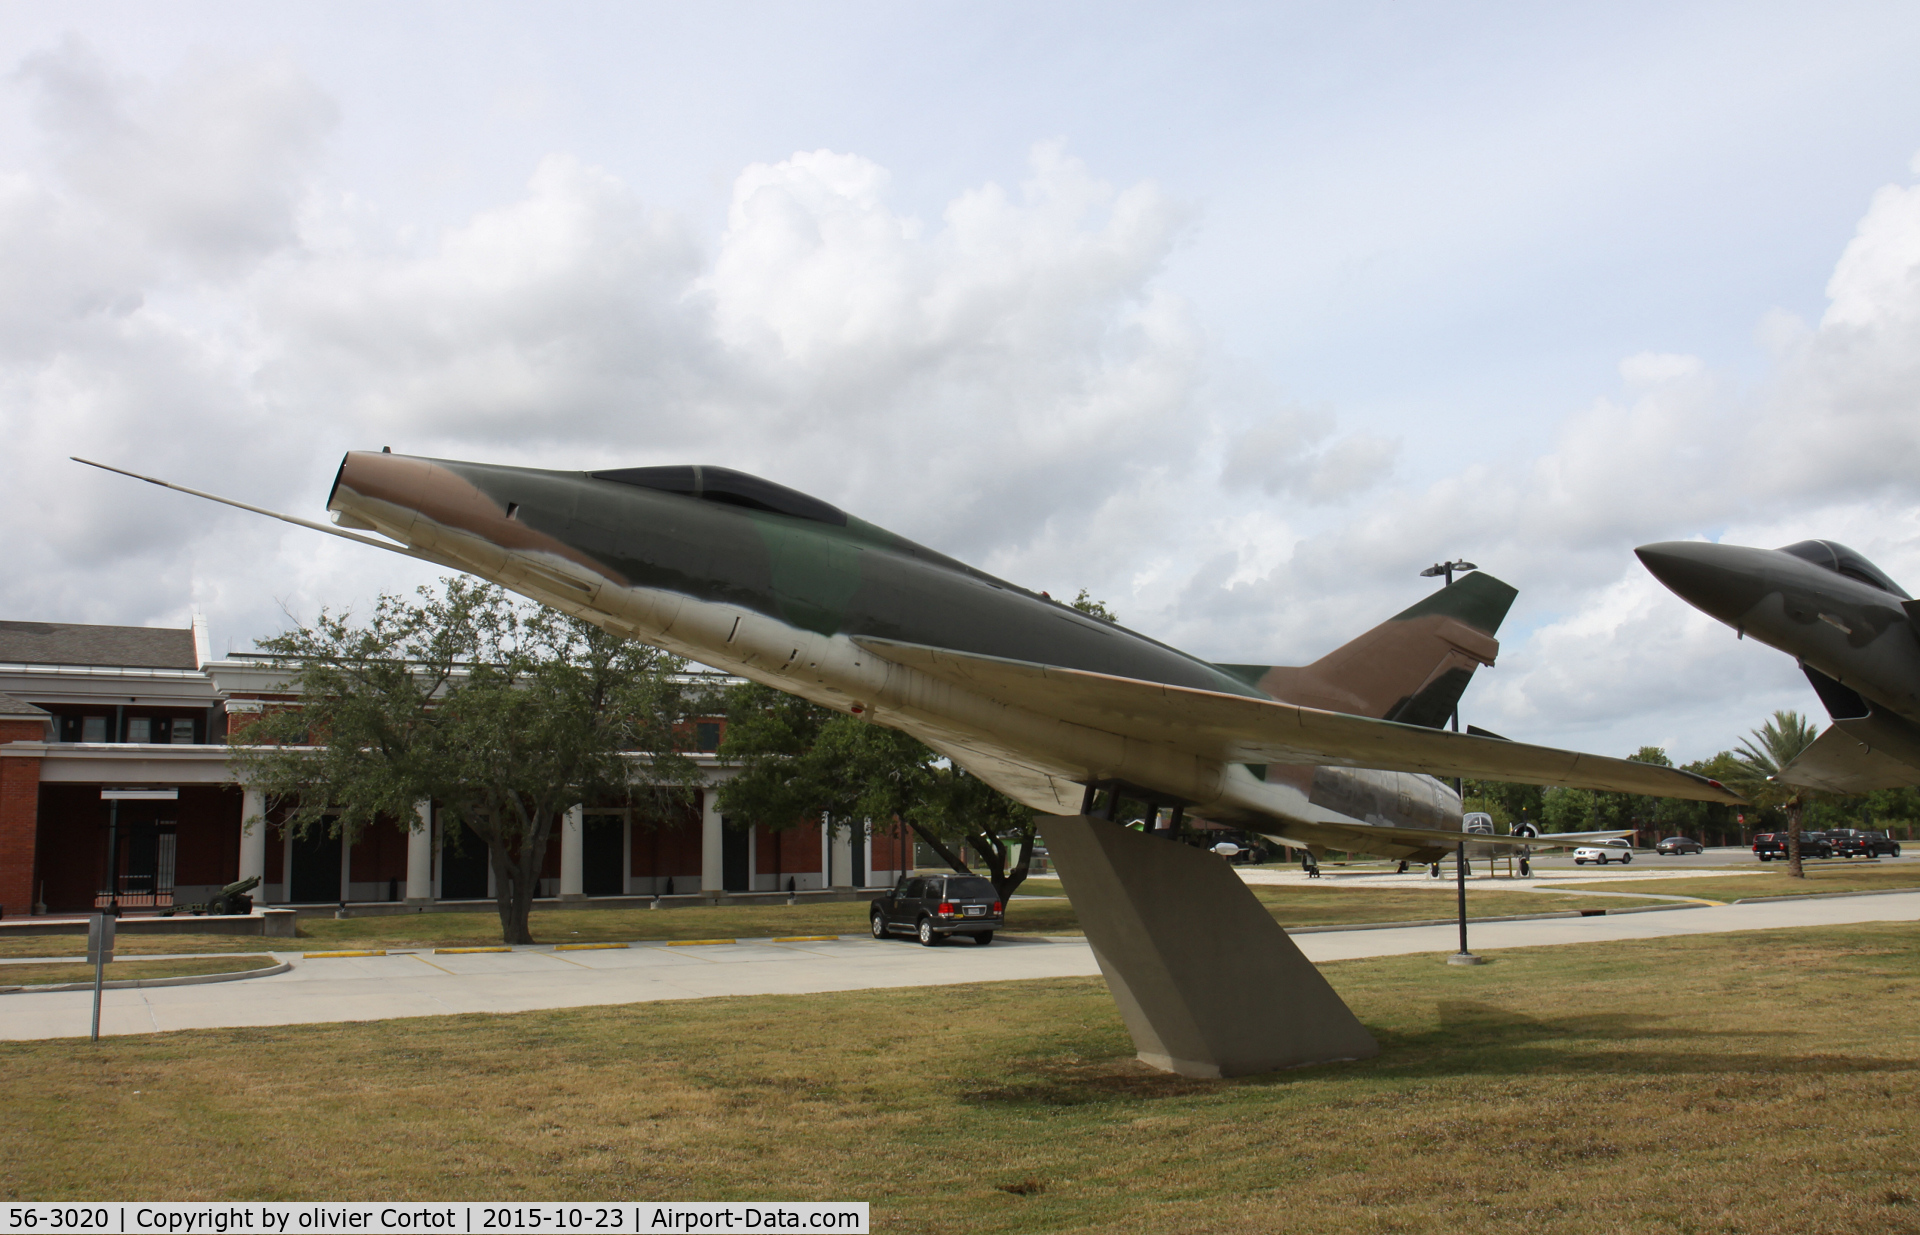 56-3020, 1956 North American F-100D  Super Sabre C/N 235-118, Jackson barracks military museum, LA